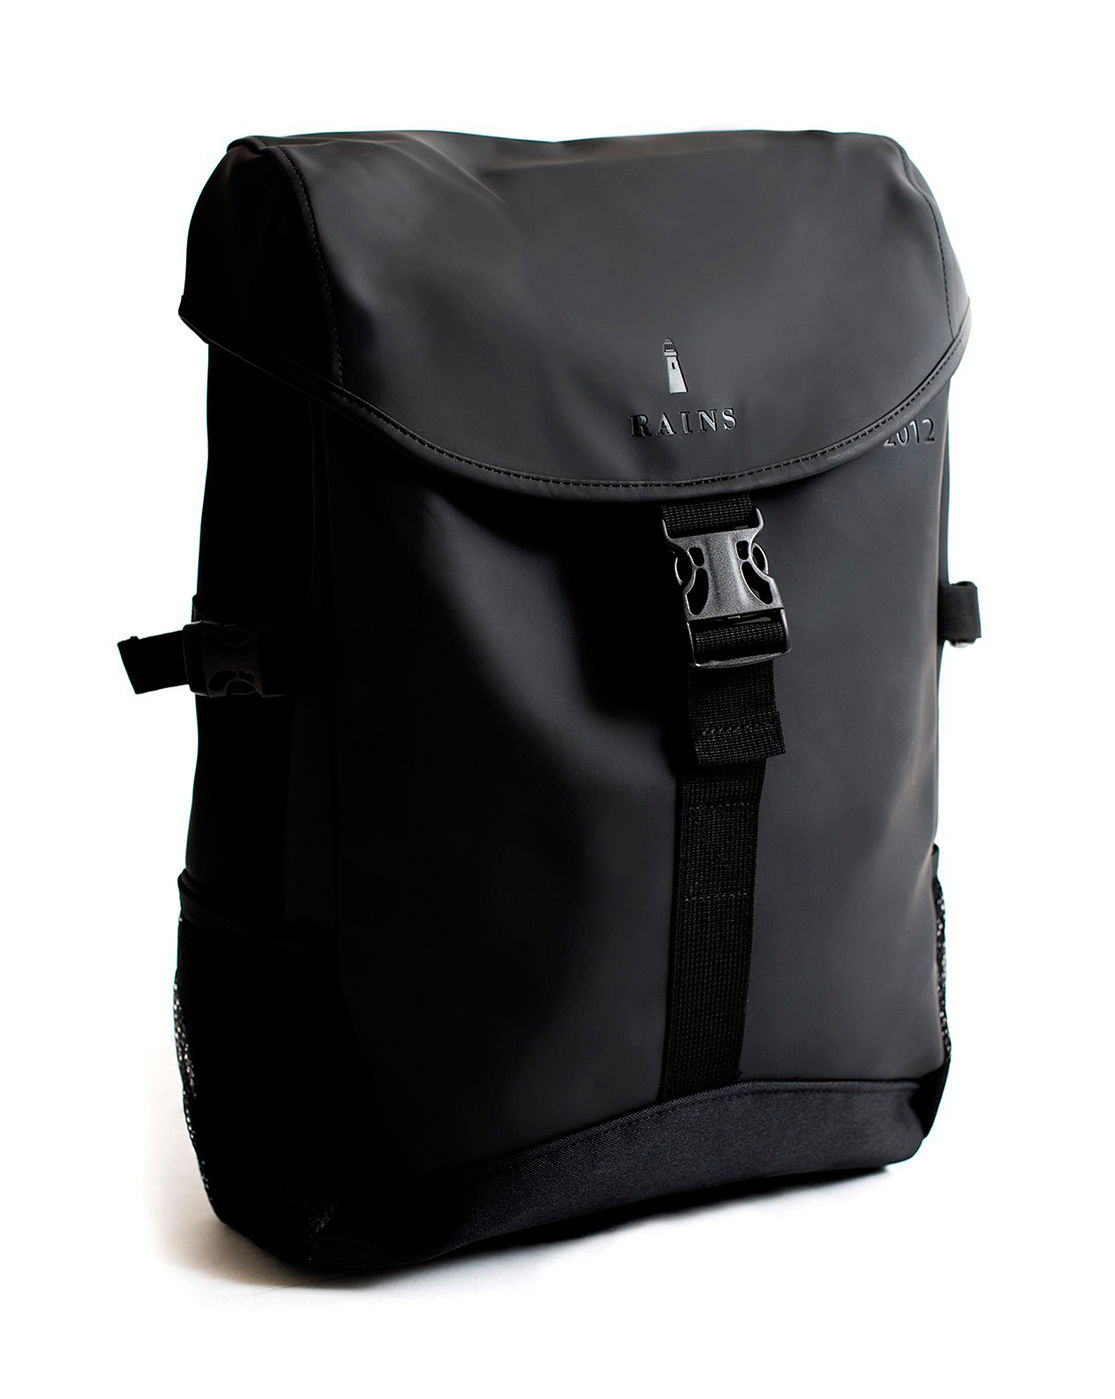 Mens water resistant backpack malaysia, best backpacks uk 2015 forum